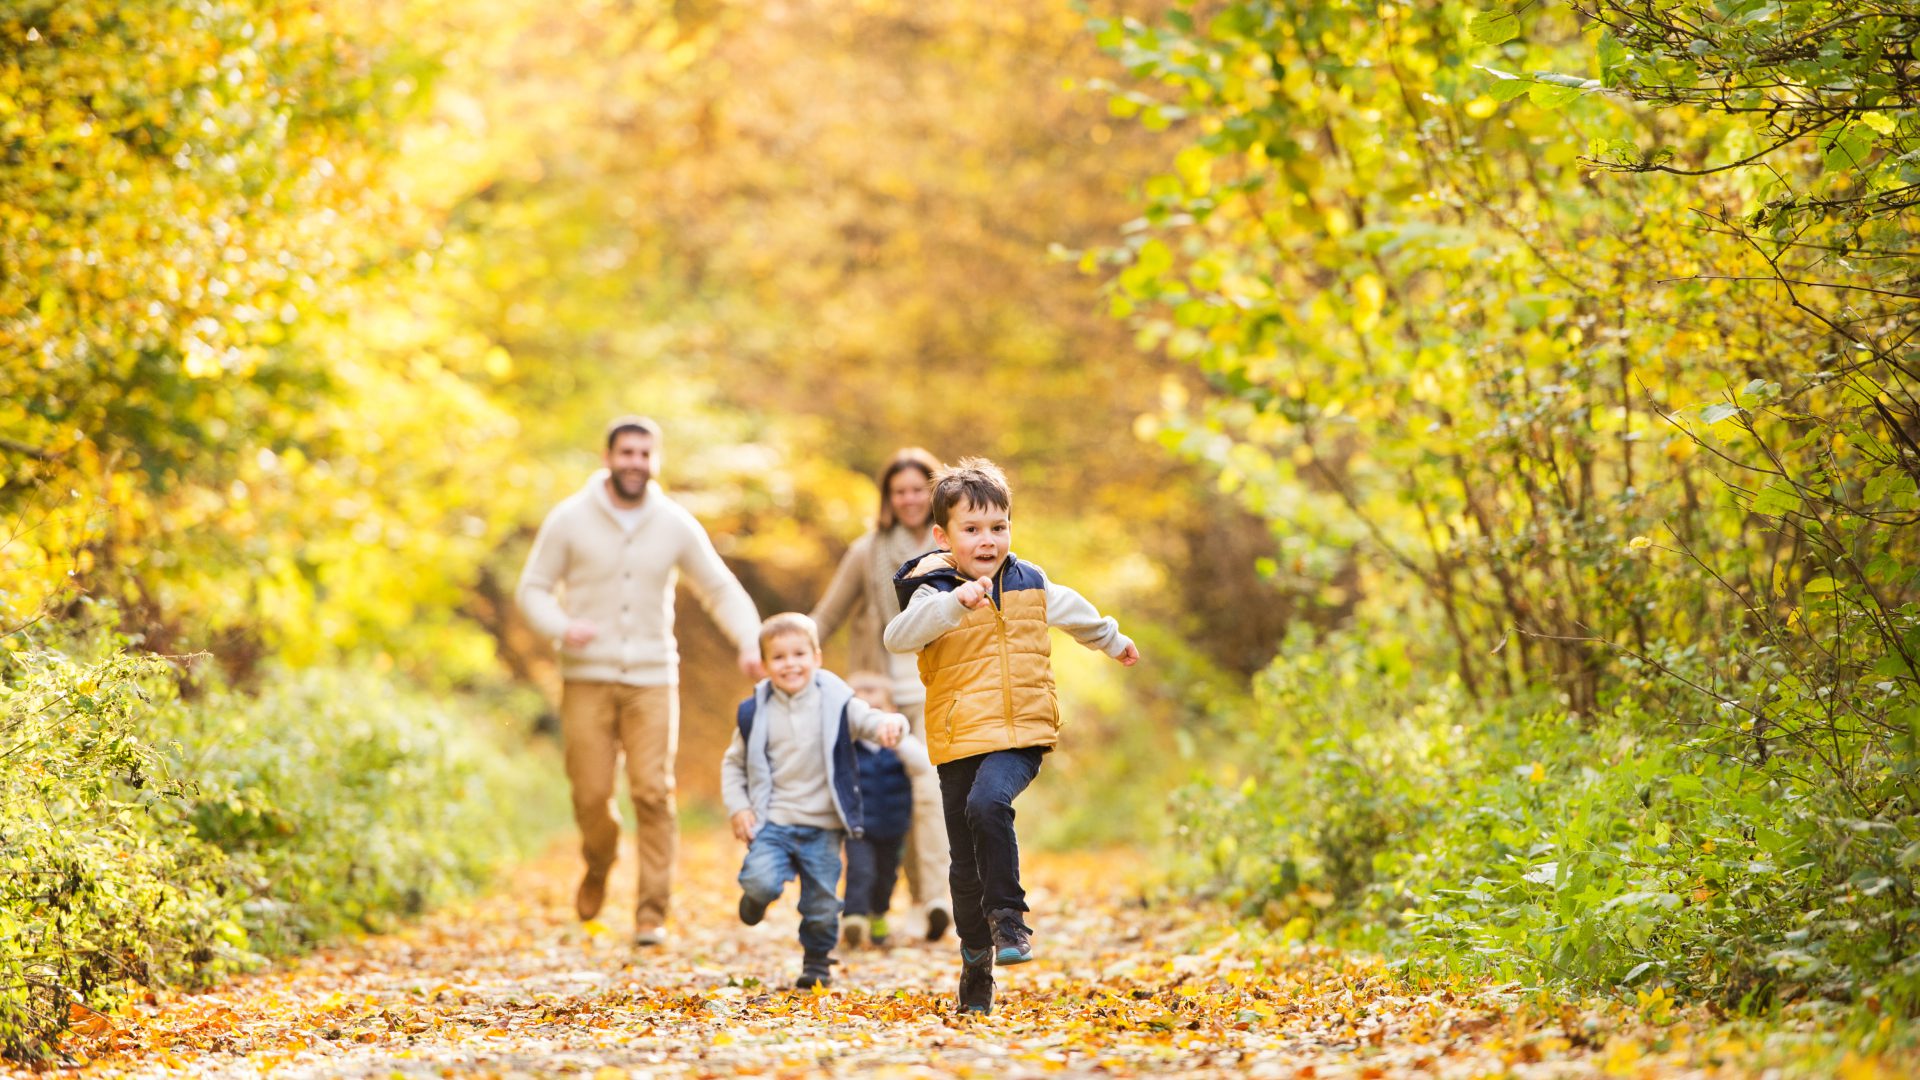 Family Activity Ideas for October Half-Term